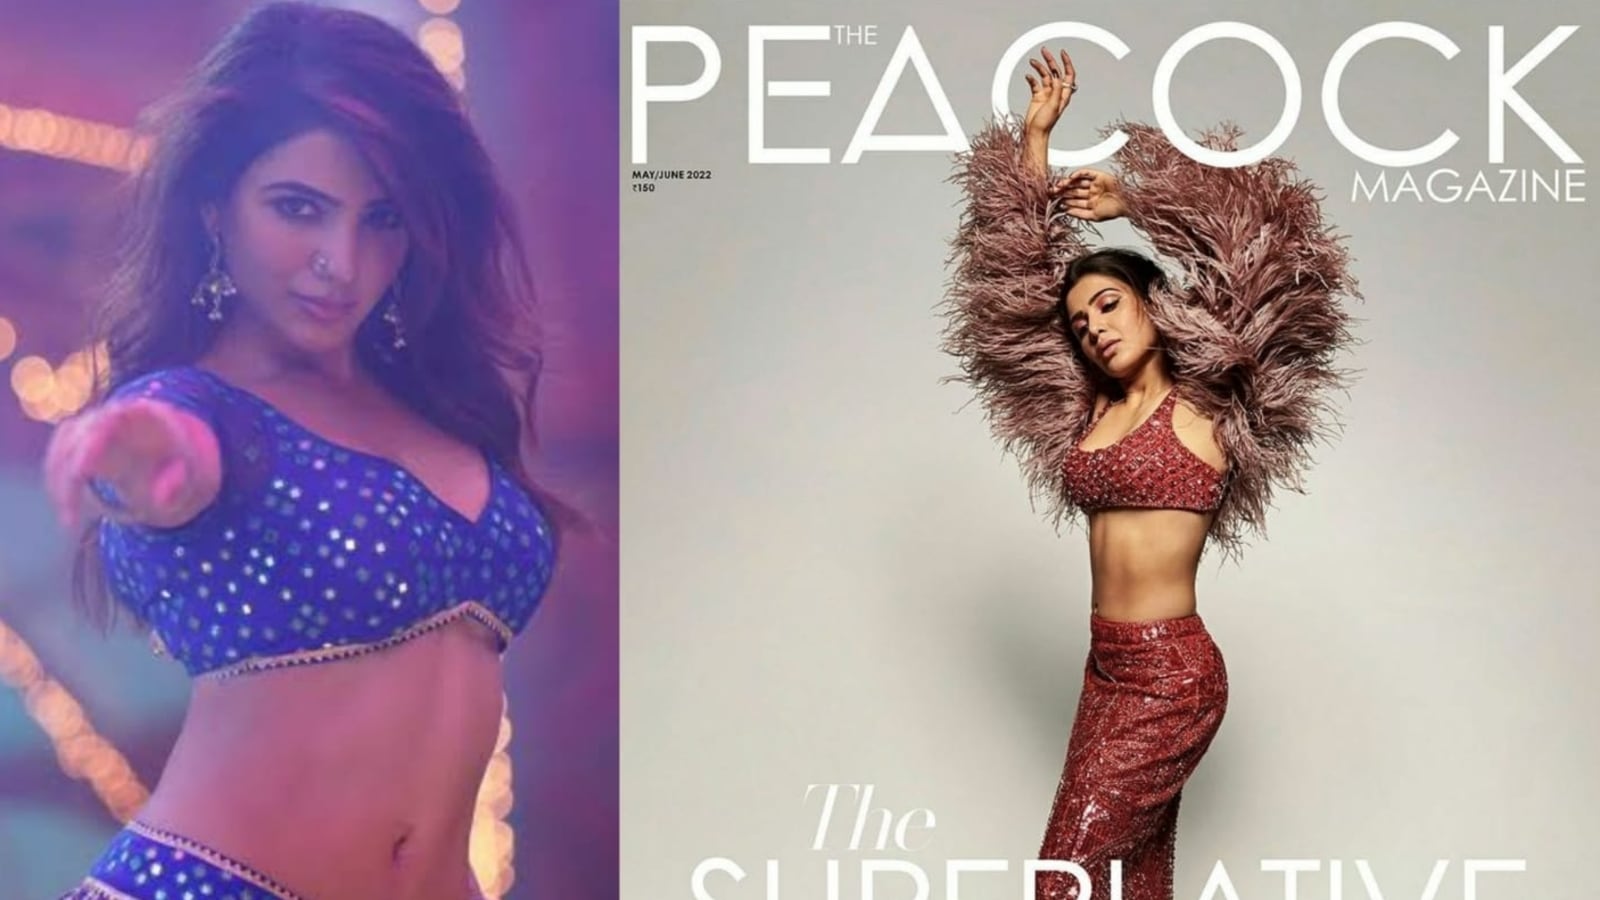 Telugu Samantha Sex Vedios - Samantha Ruth Prabhu appears on magazine cover, speaks on body image,  confidence - Hindustan Times